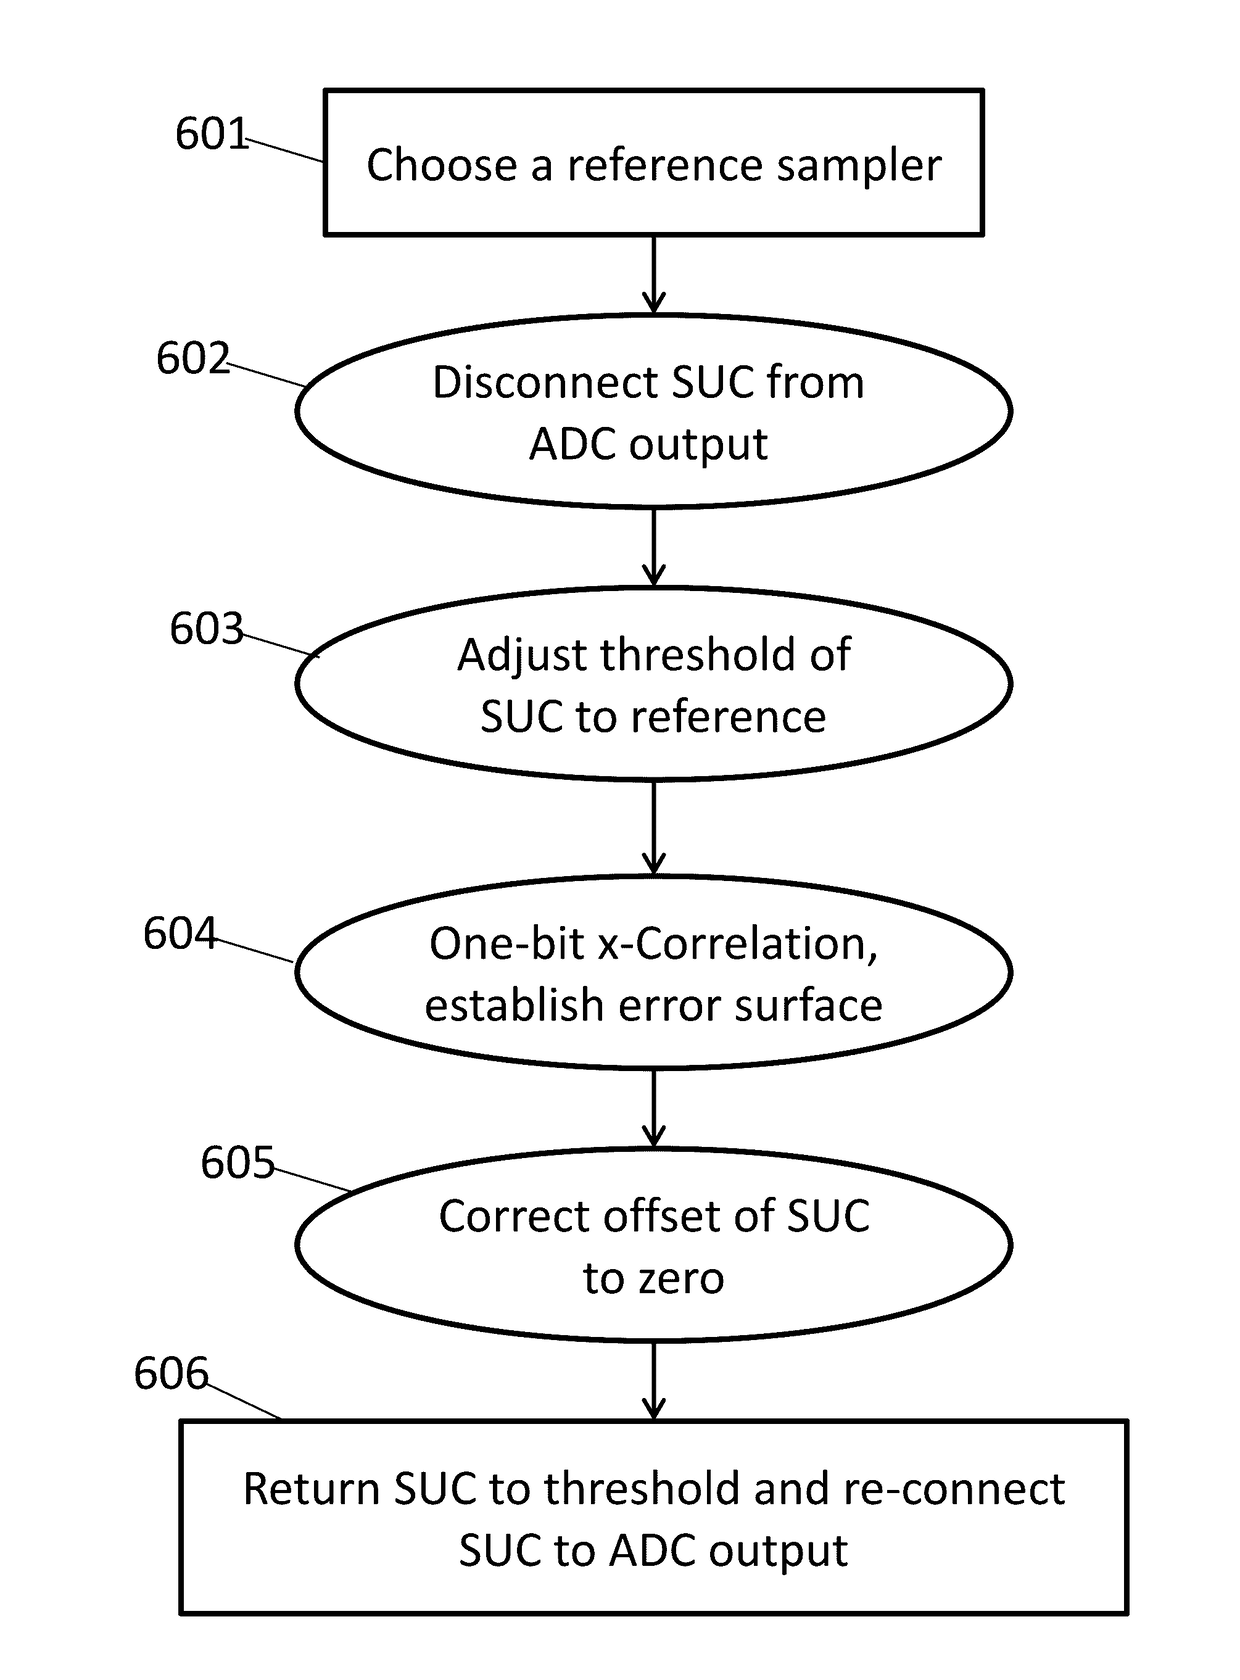 Background calibration of sampler timing errors in flash analog to digital converters